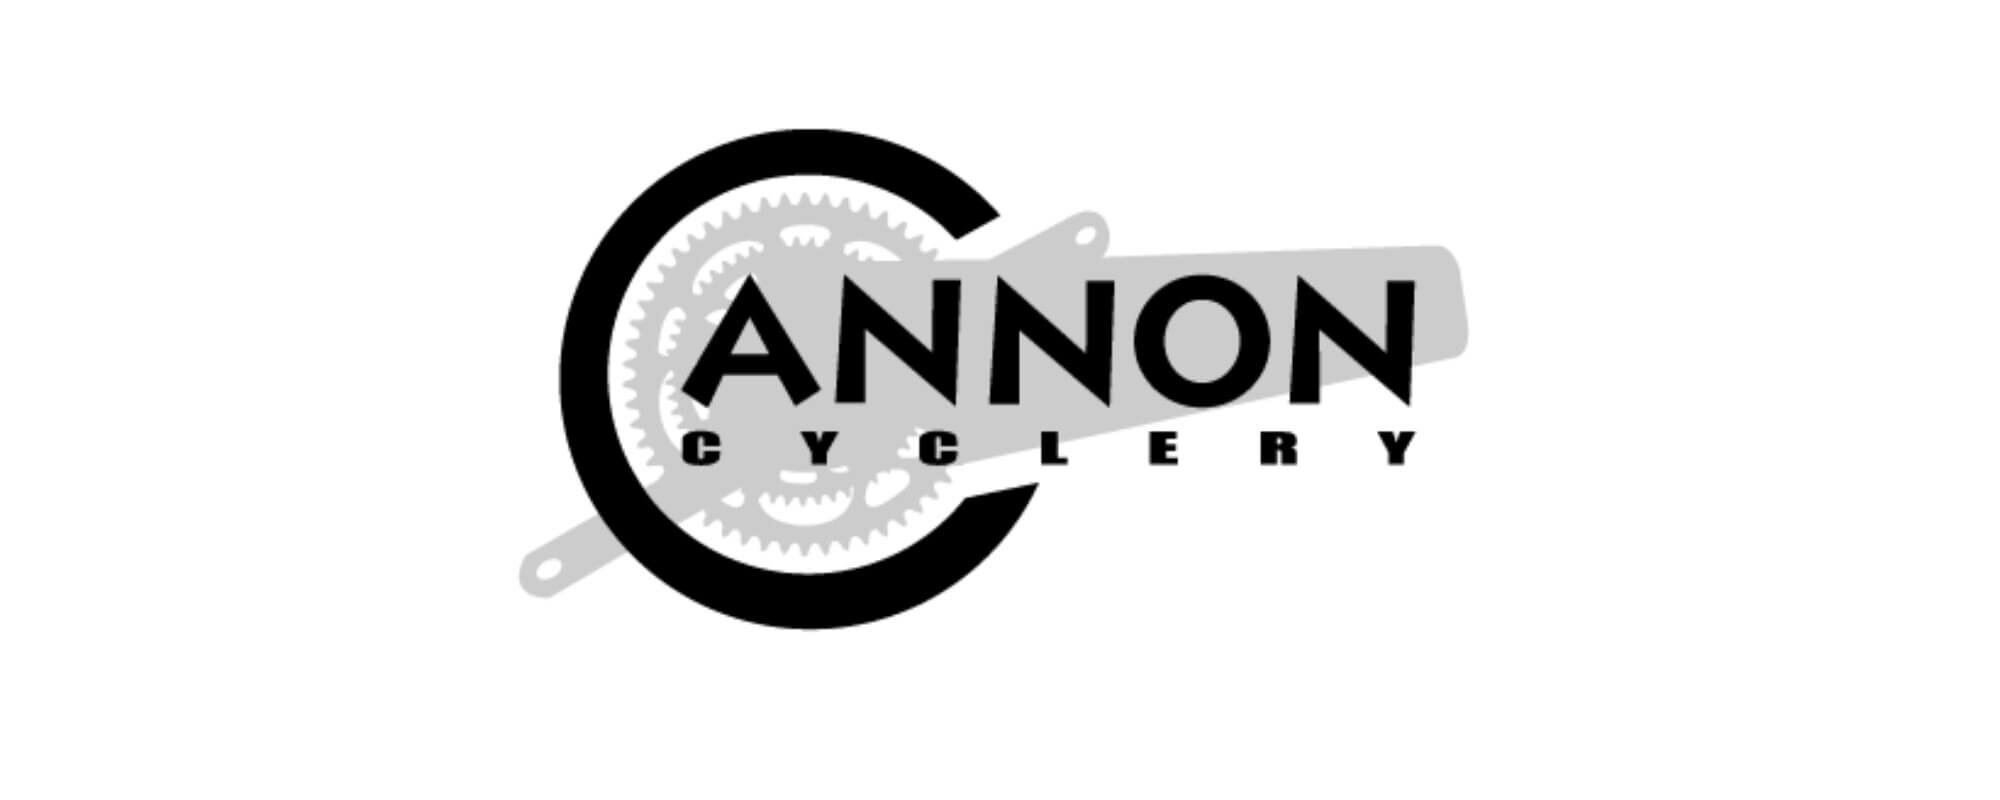 cannon cyclery logo.jpg